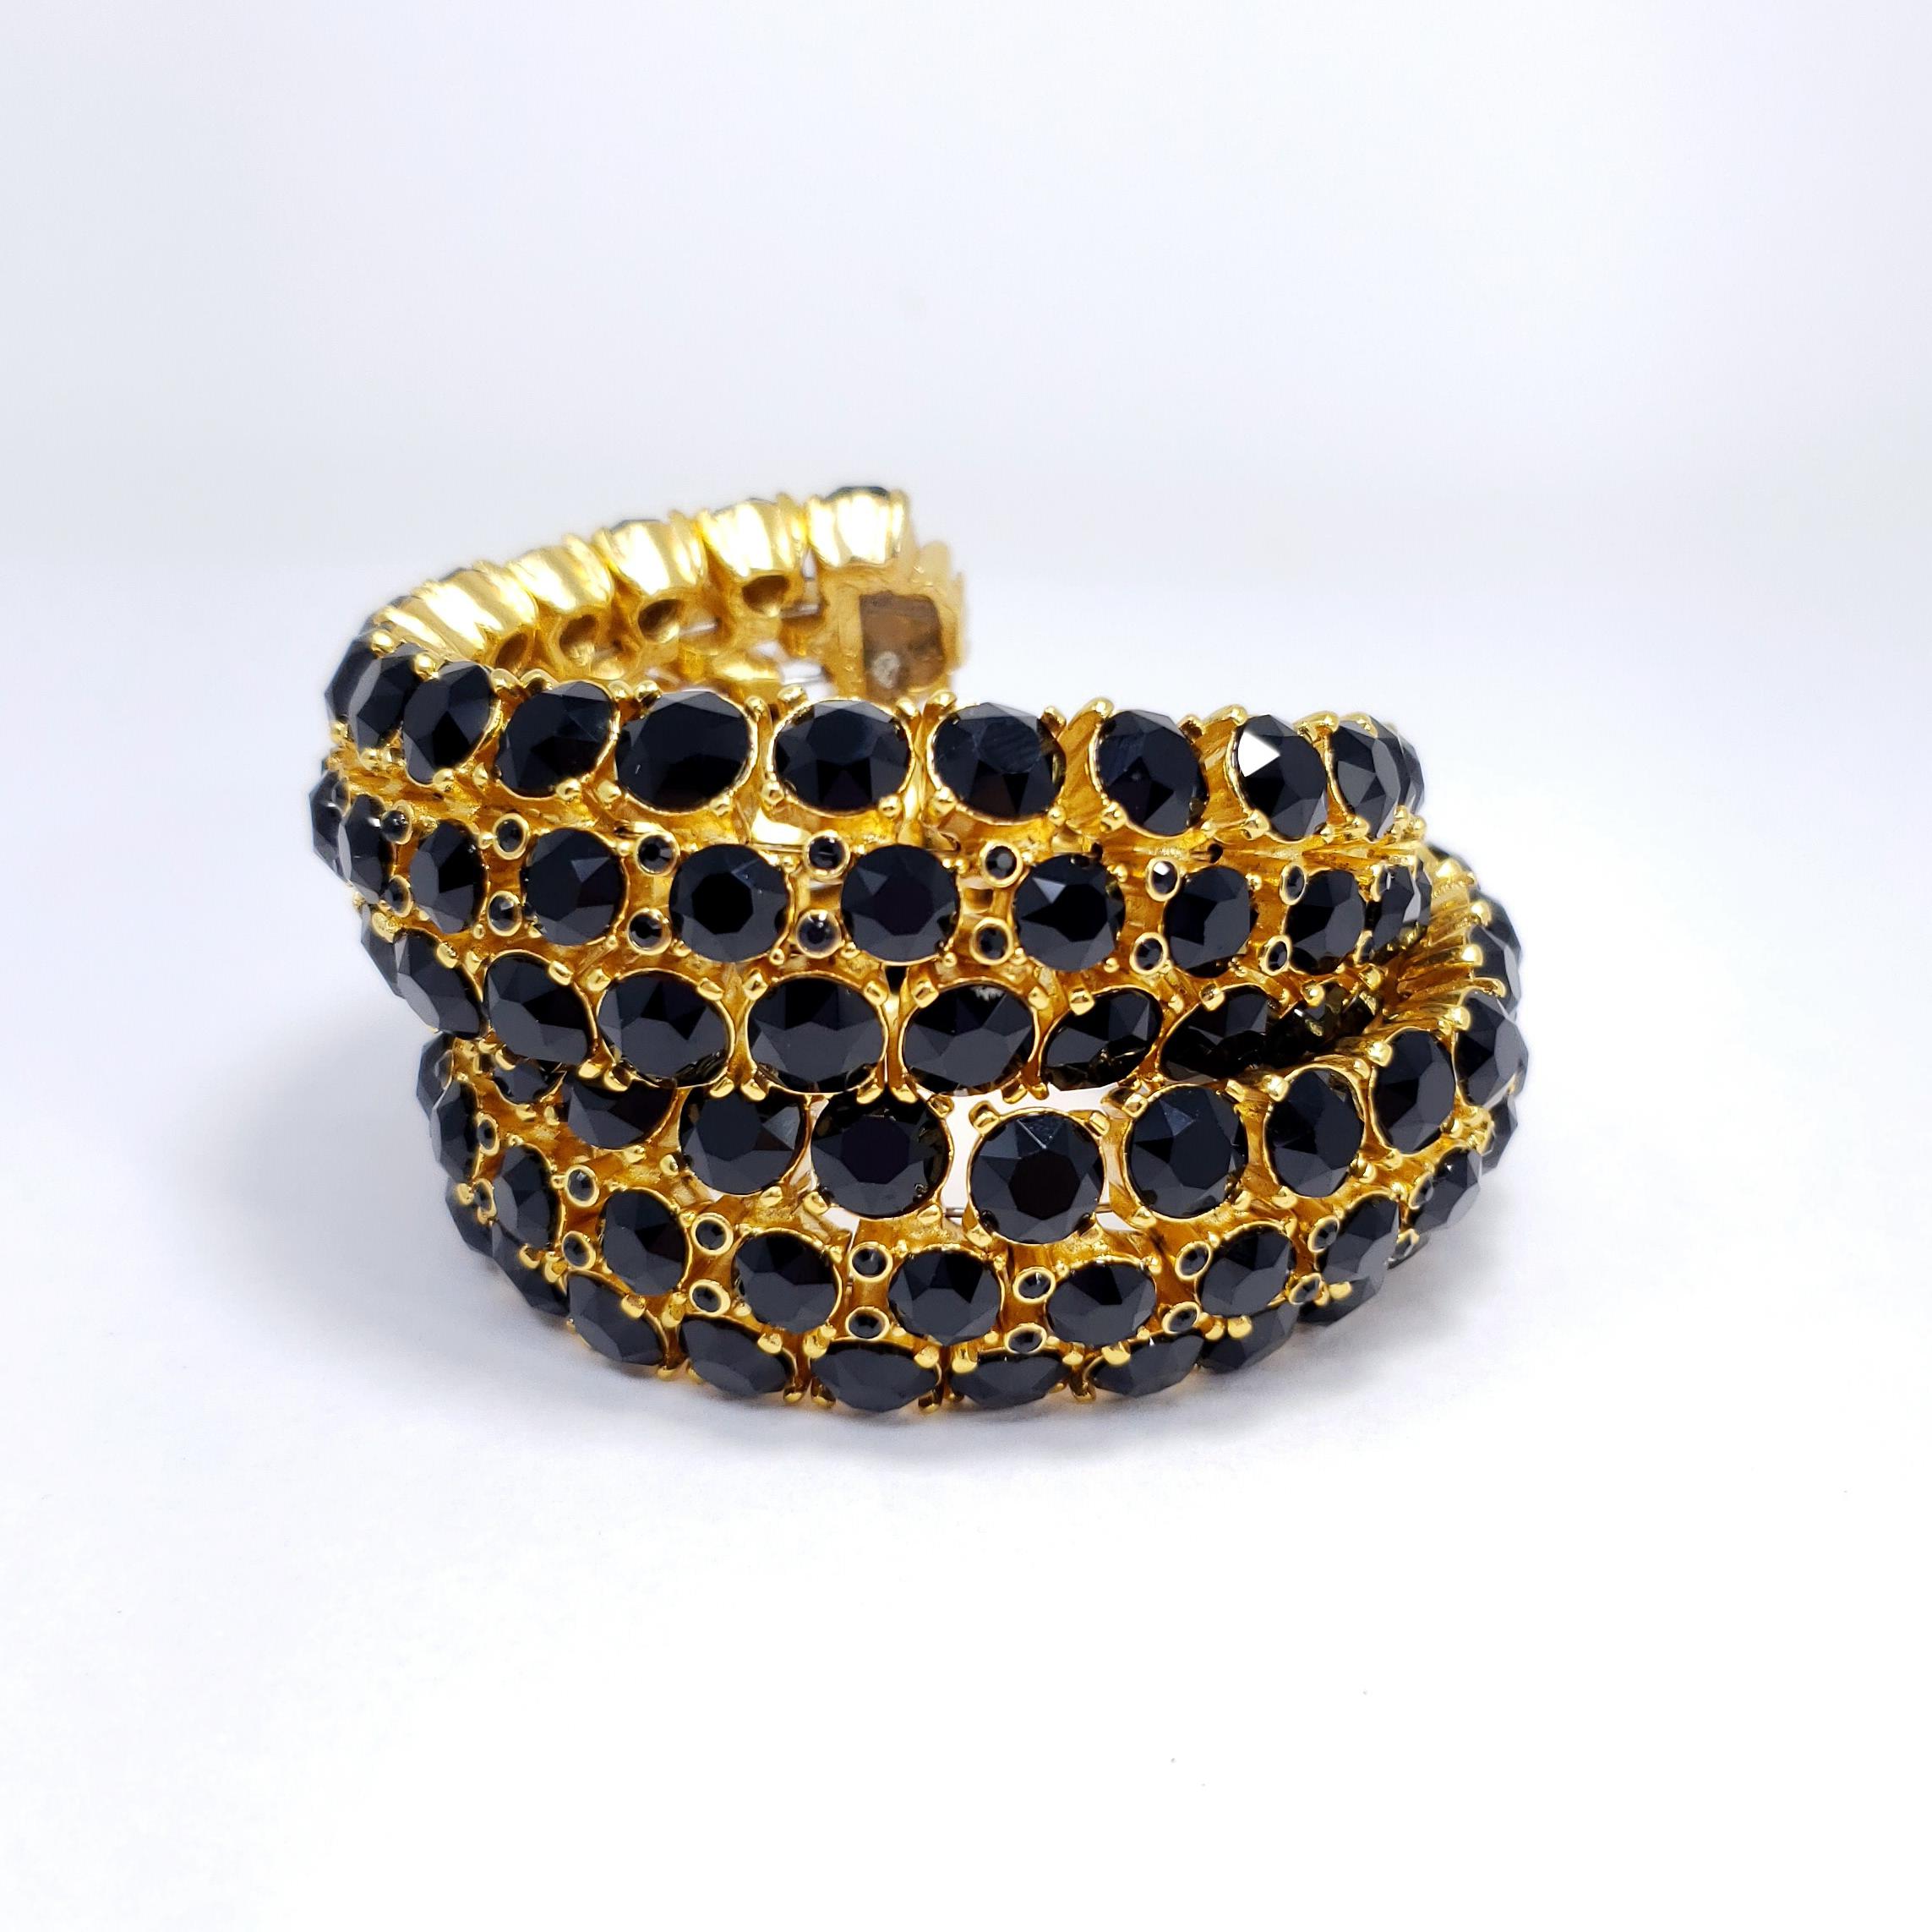 Golden Oscar de la Renta bracelet set with jet-black Swarovski crystals.

Gold plated. Wrap / bangle style. Wire-set.

Hallmarks: Oscar de la Renta, Made in USA